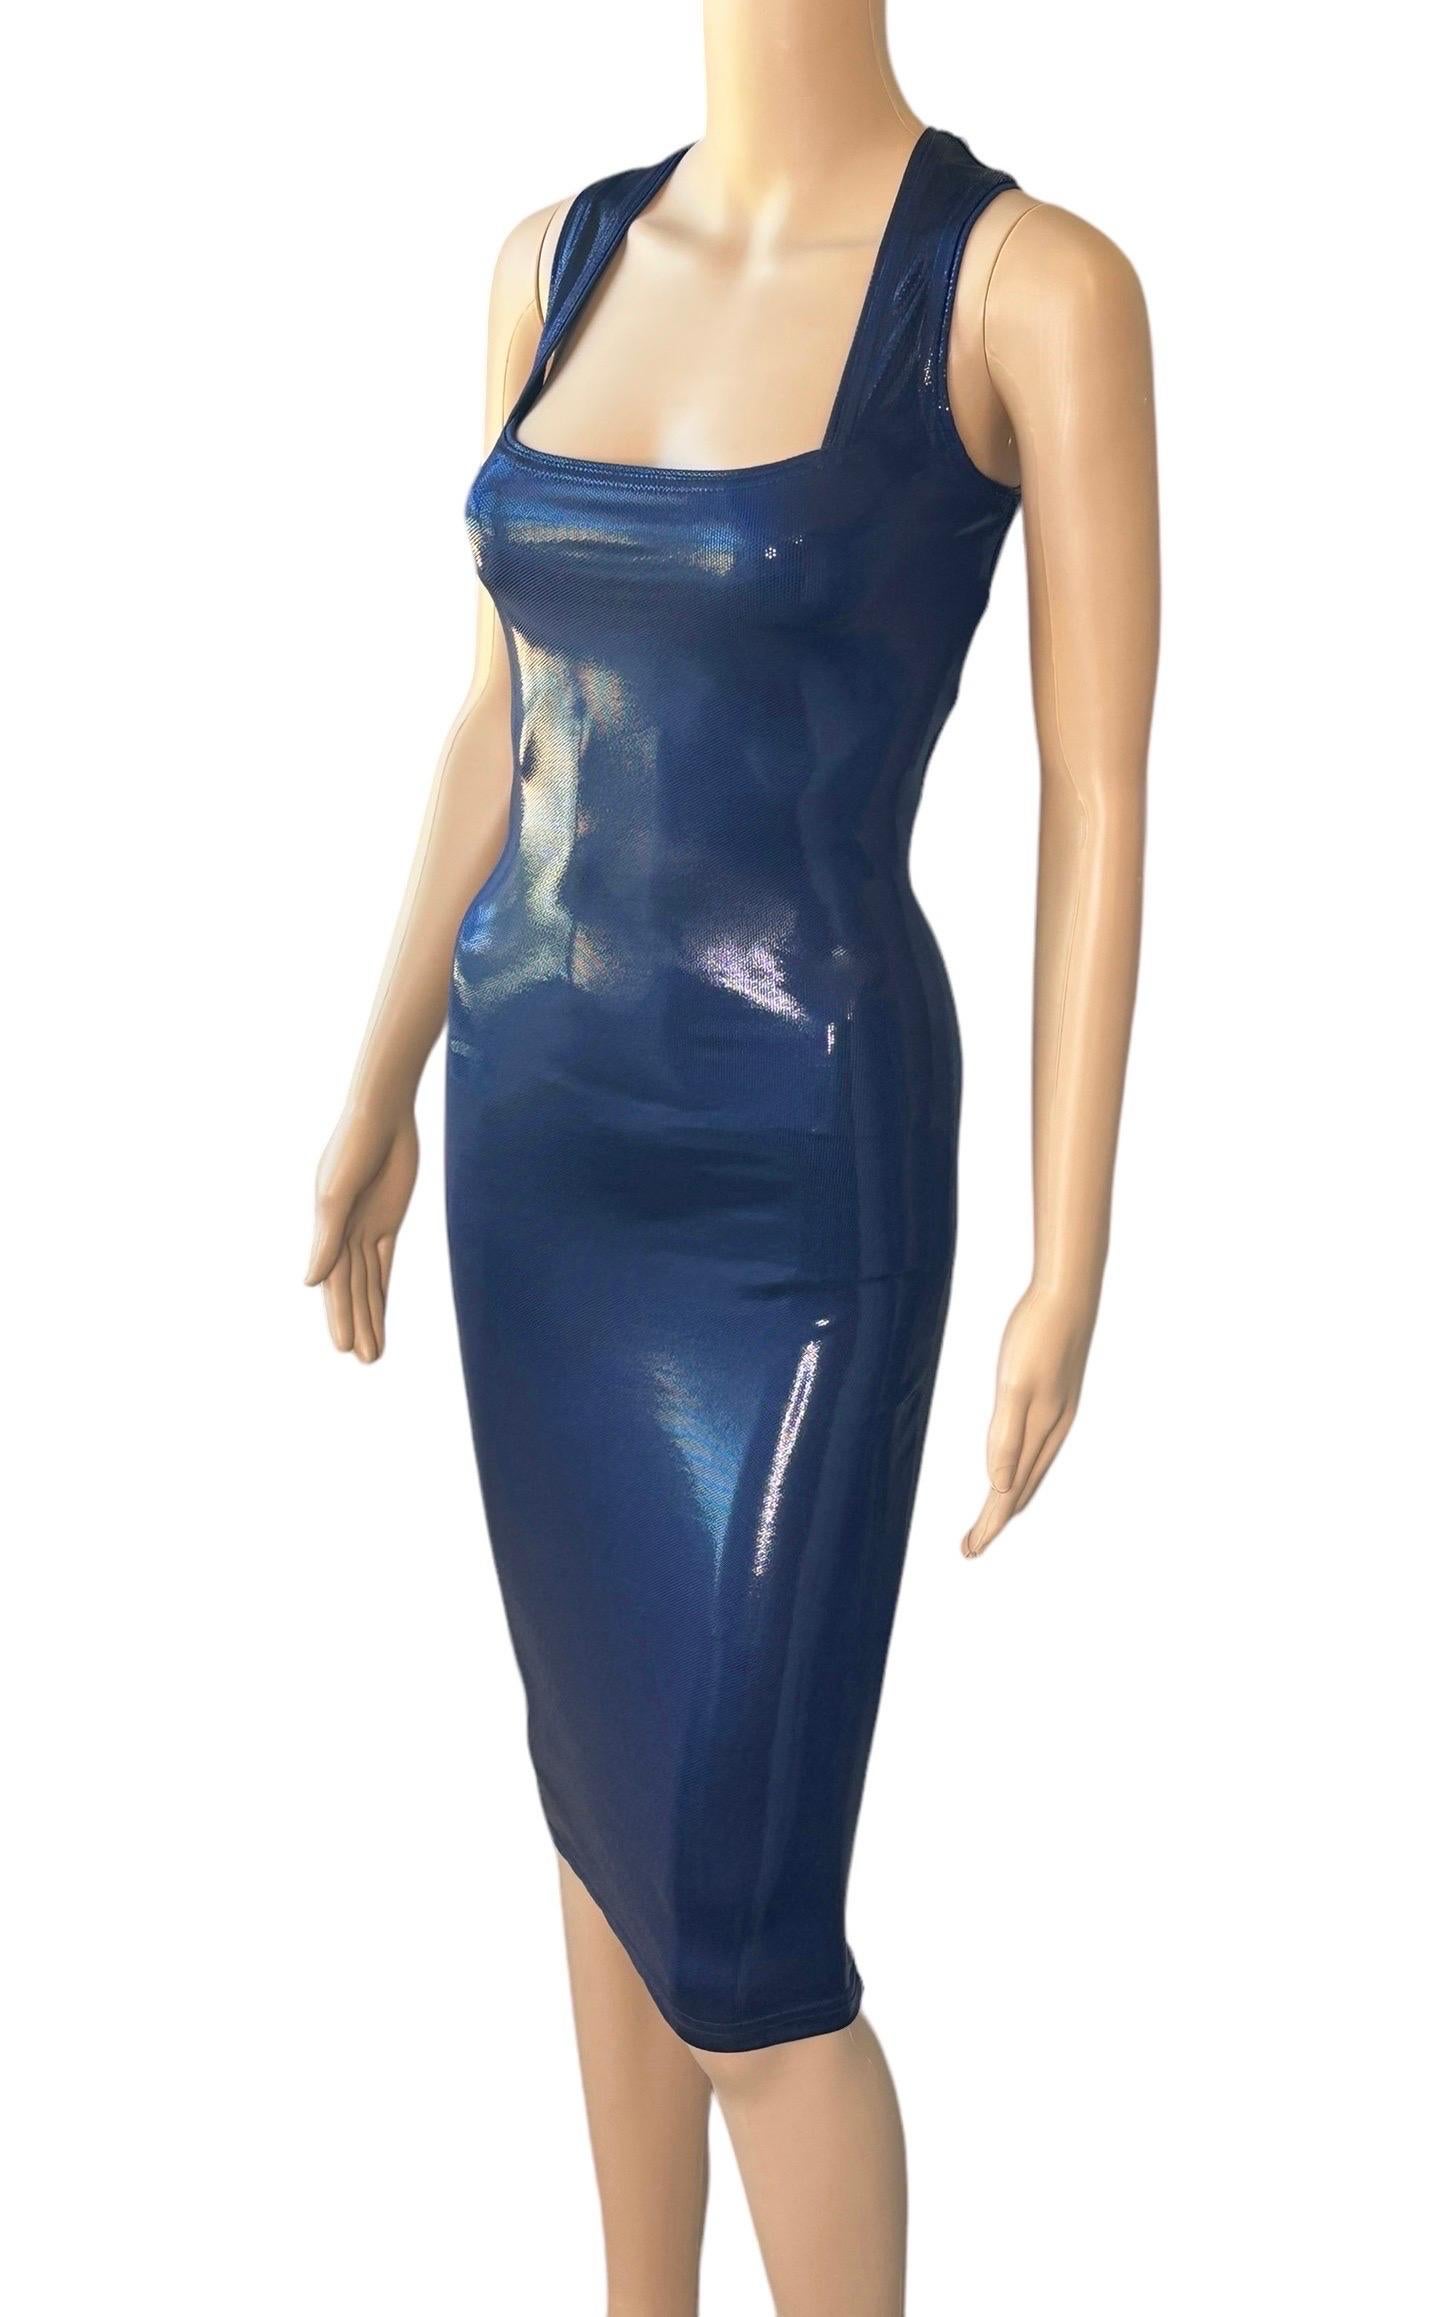 Gianni Versace c. 1994 Vintage Wet Look Stretch Bodycon Navy Blue Midi Dress 4